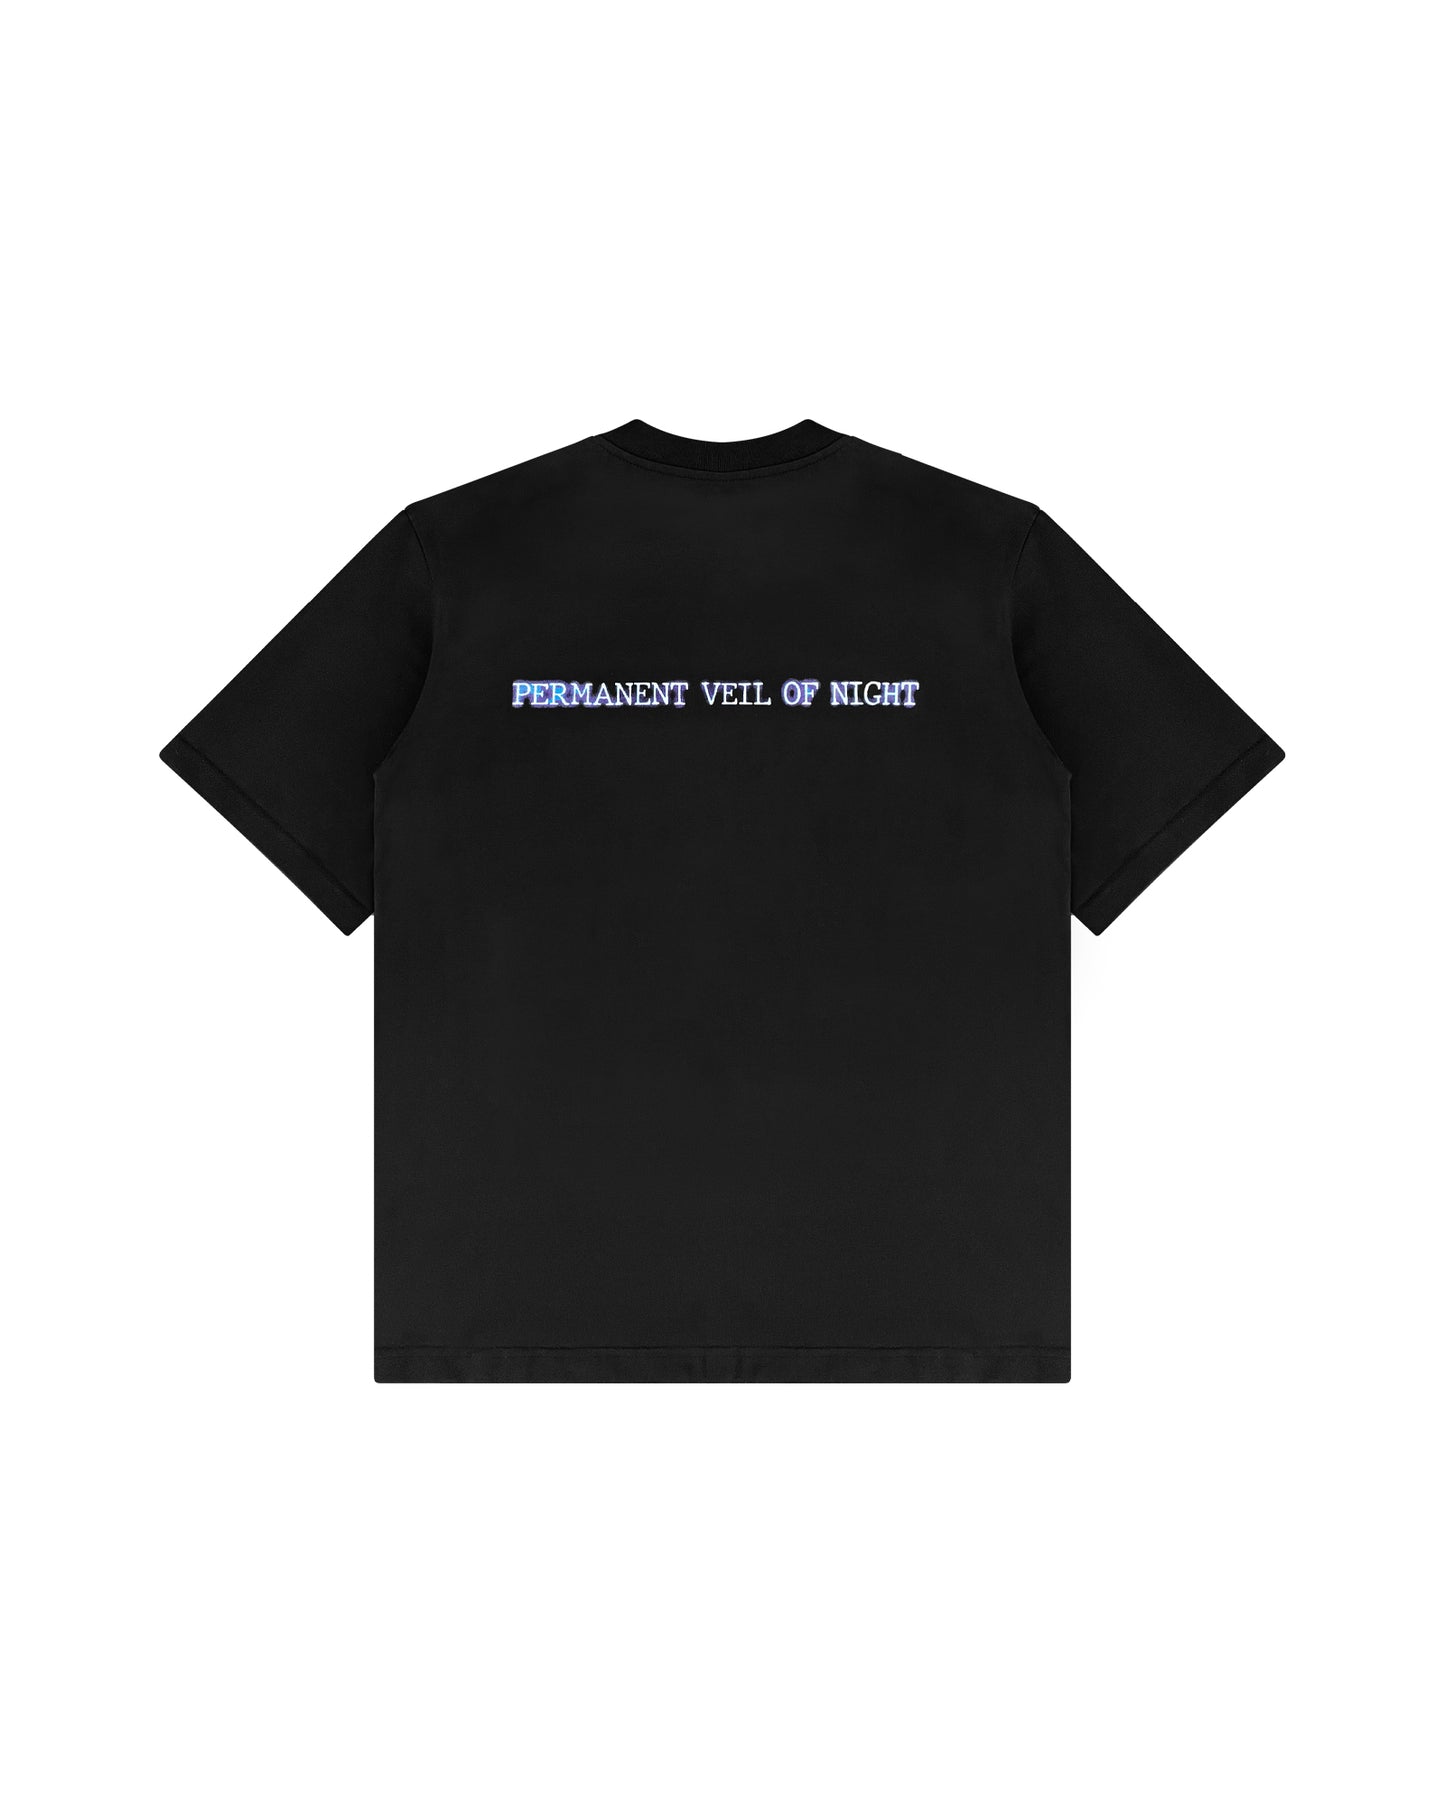 Veil of Night T-Shirt